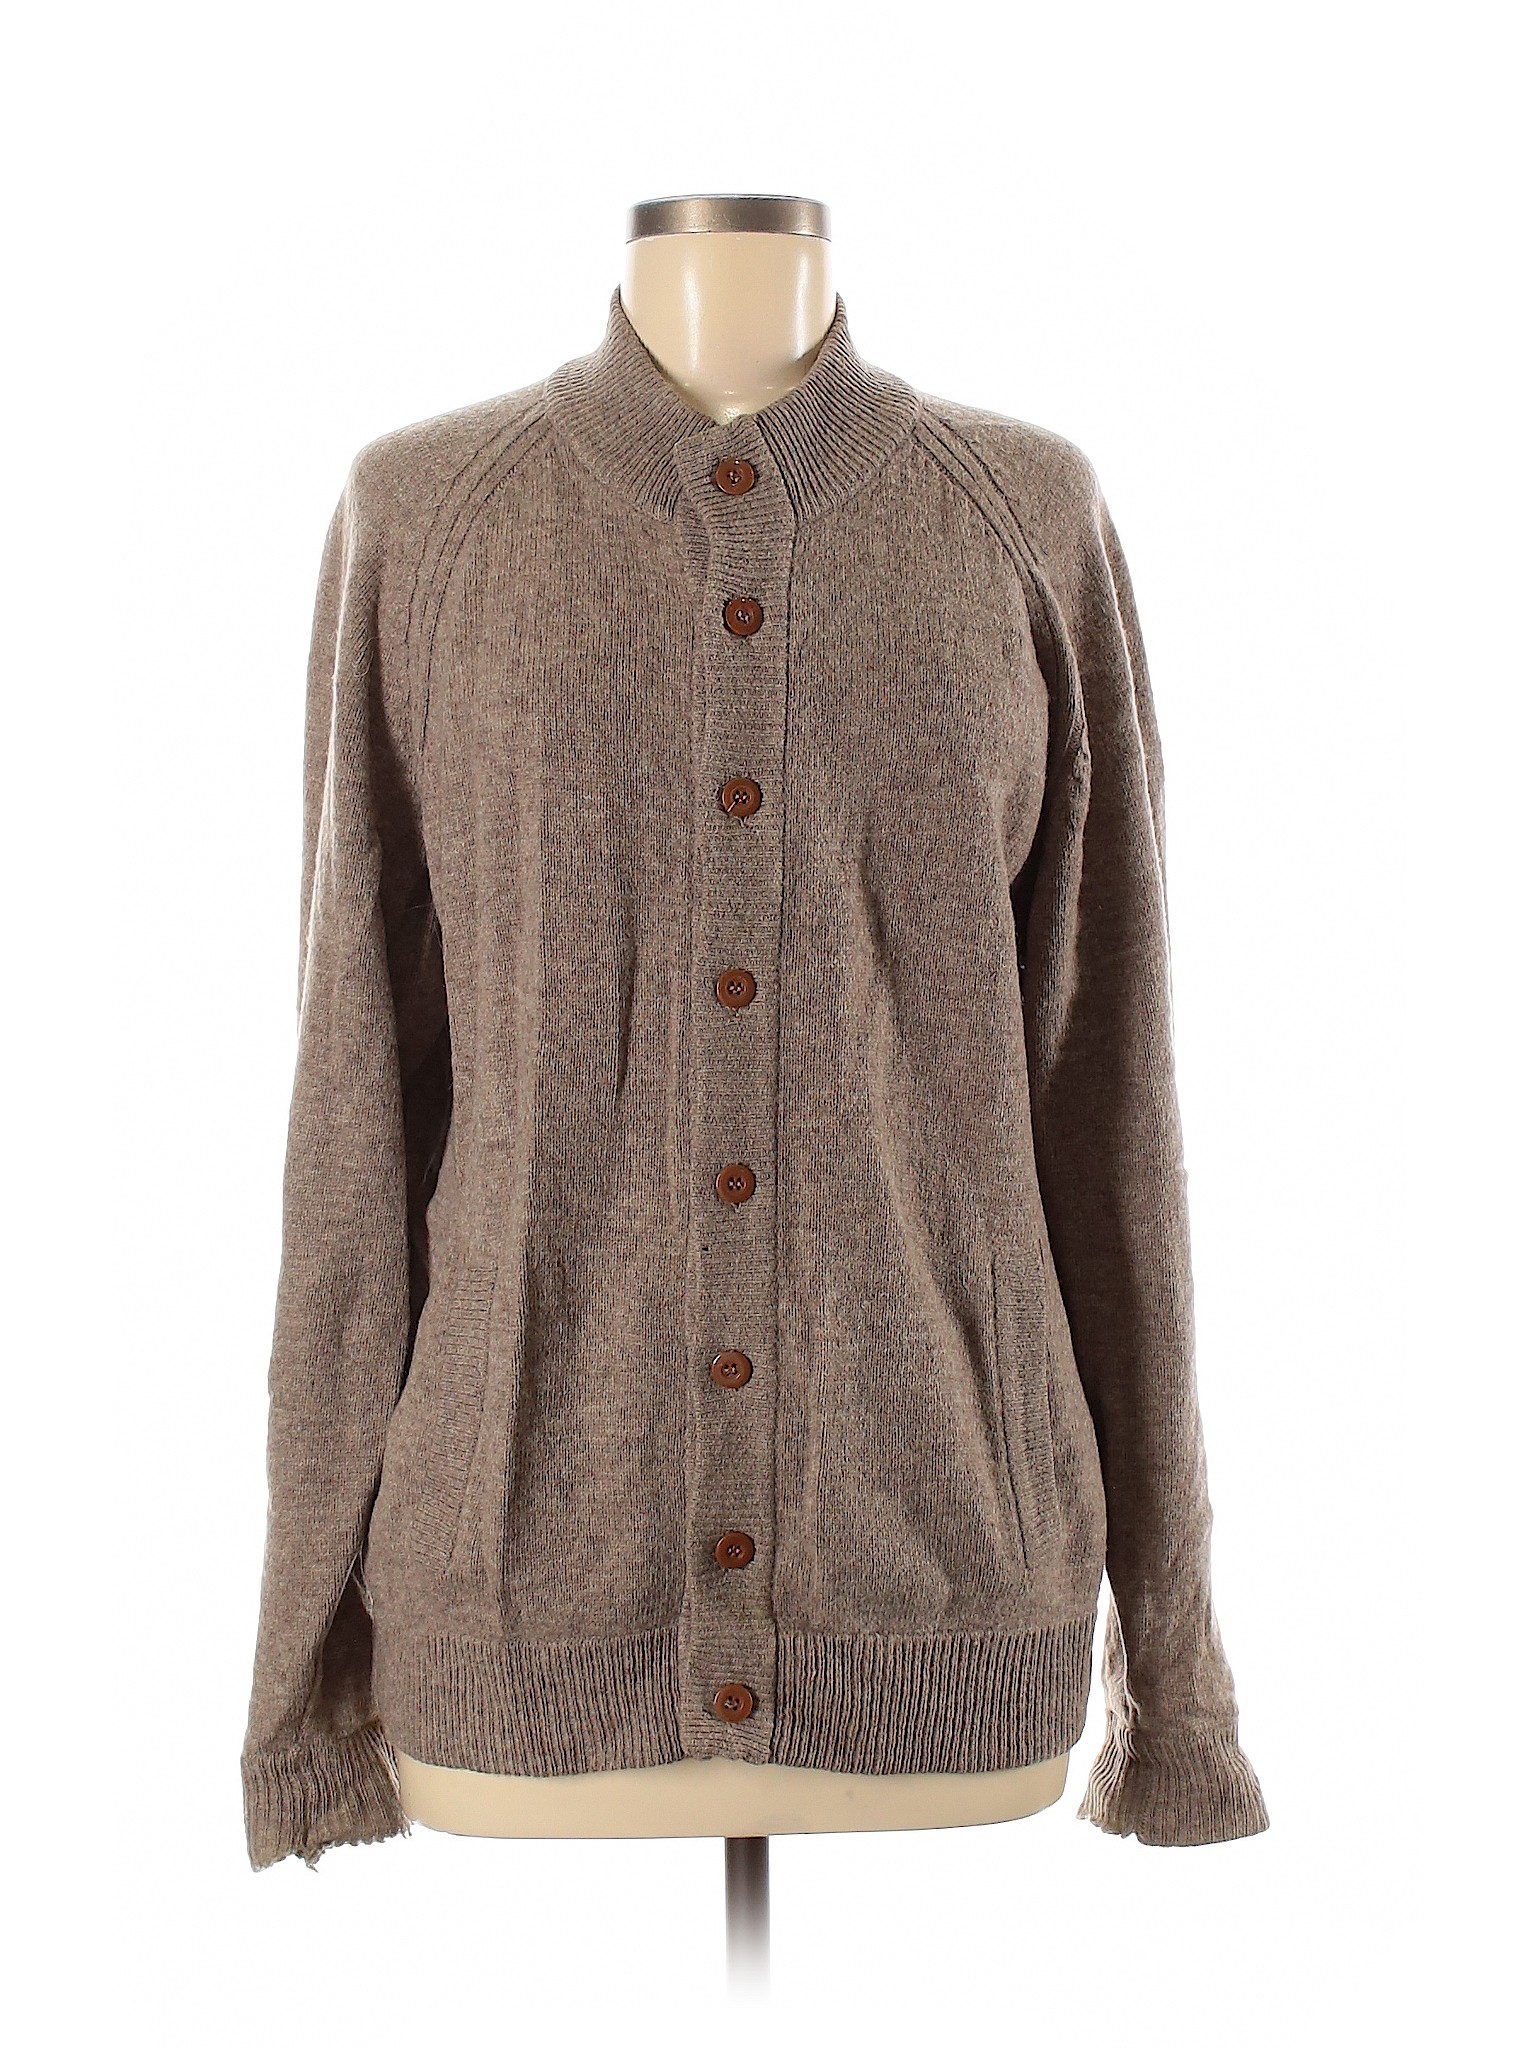 Barneys New York Women Brown Wool Cardigan M | eBay